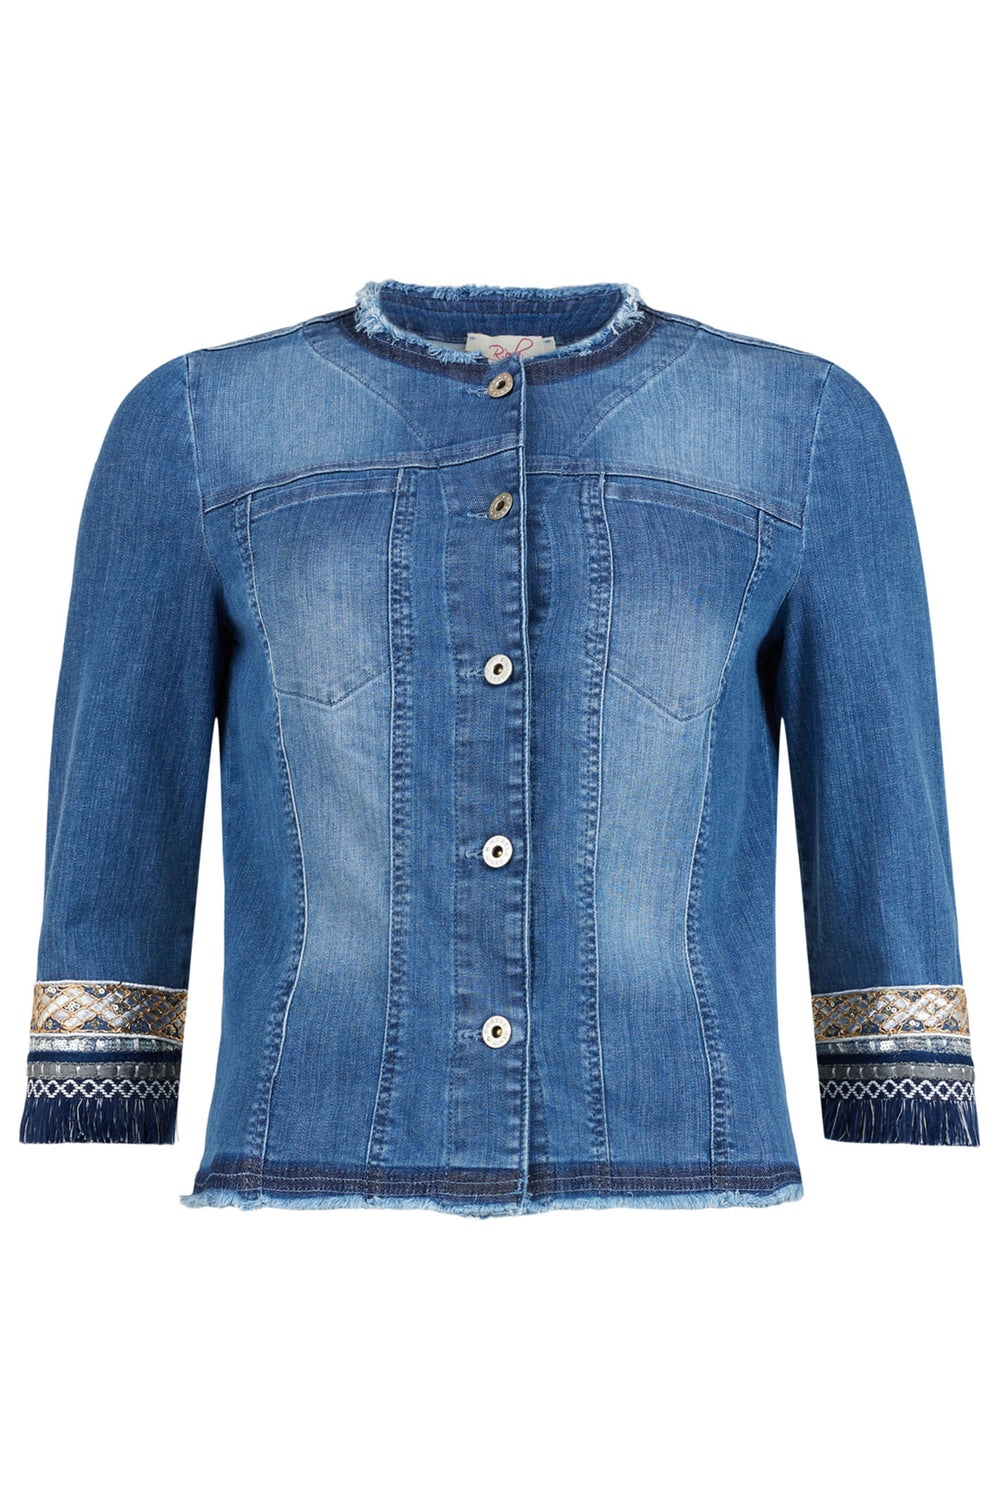 Robell 57423 54159 Josy Blue Denim Round Neck Jacket - Olivia Grace Fashion